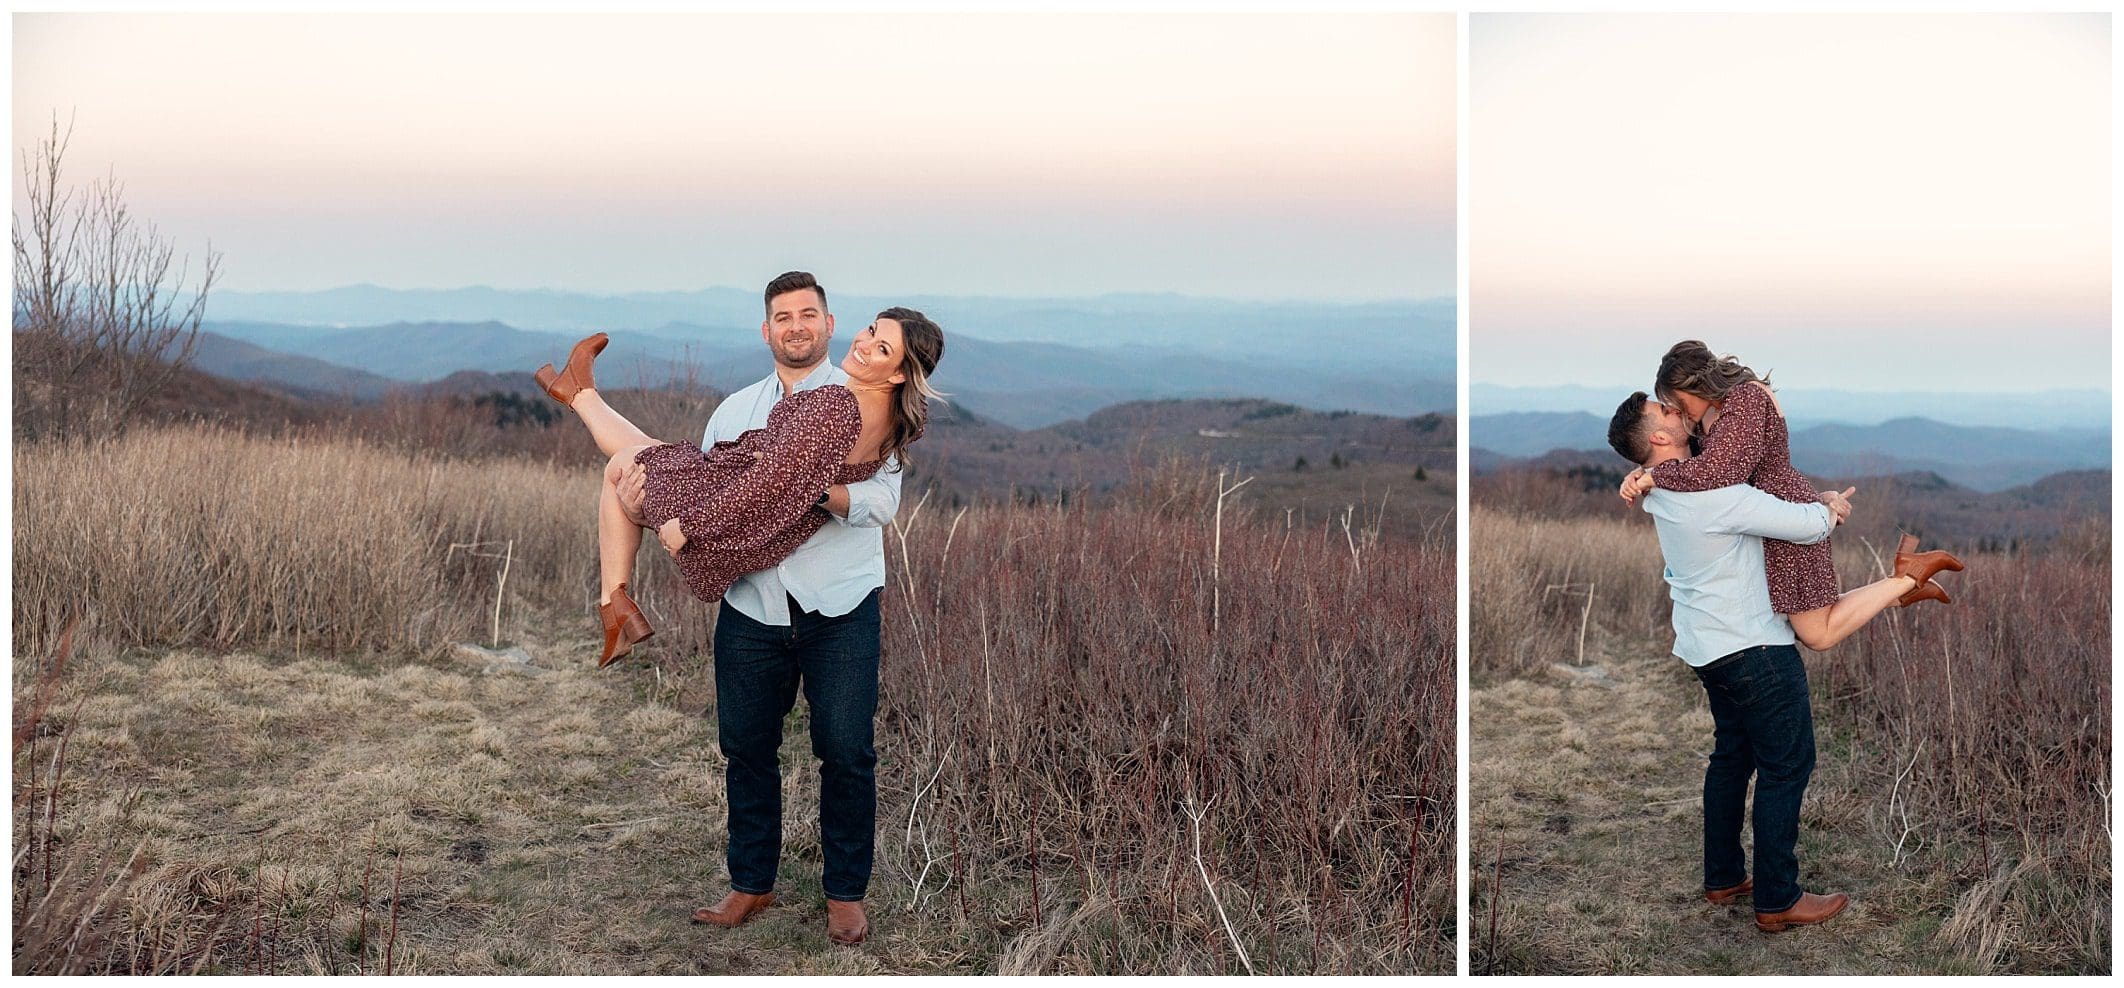 Joyful engagement photos at sunset with mountain views by Kathy Beaver Asheville Wedding Photographer 